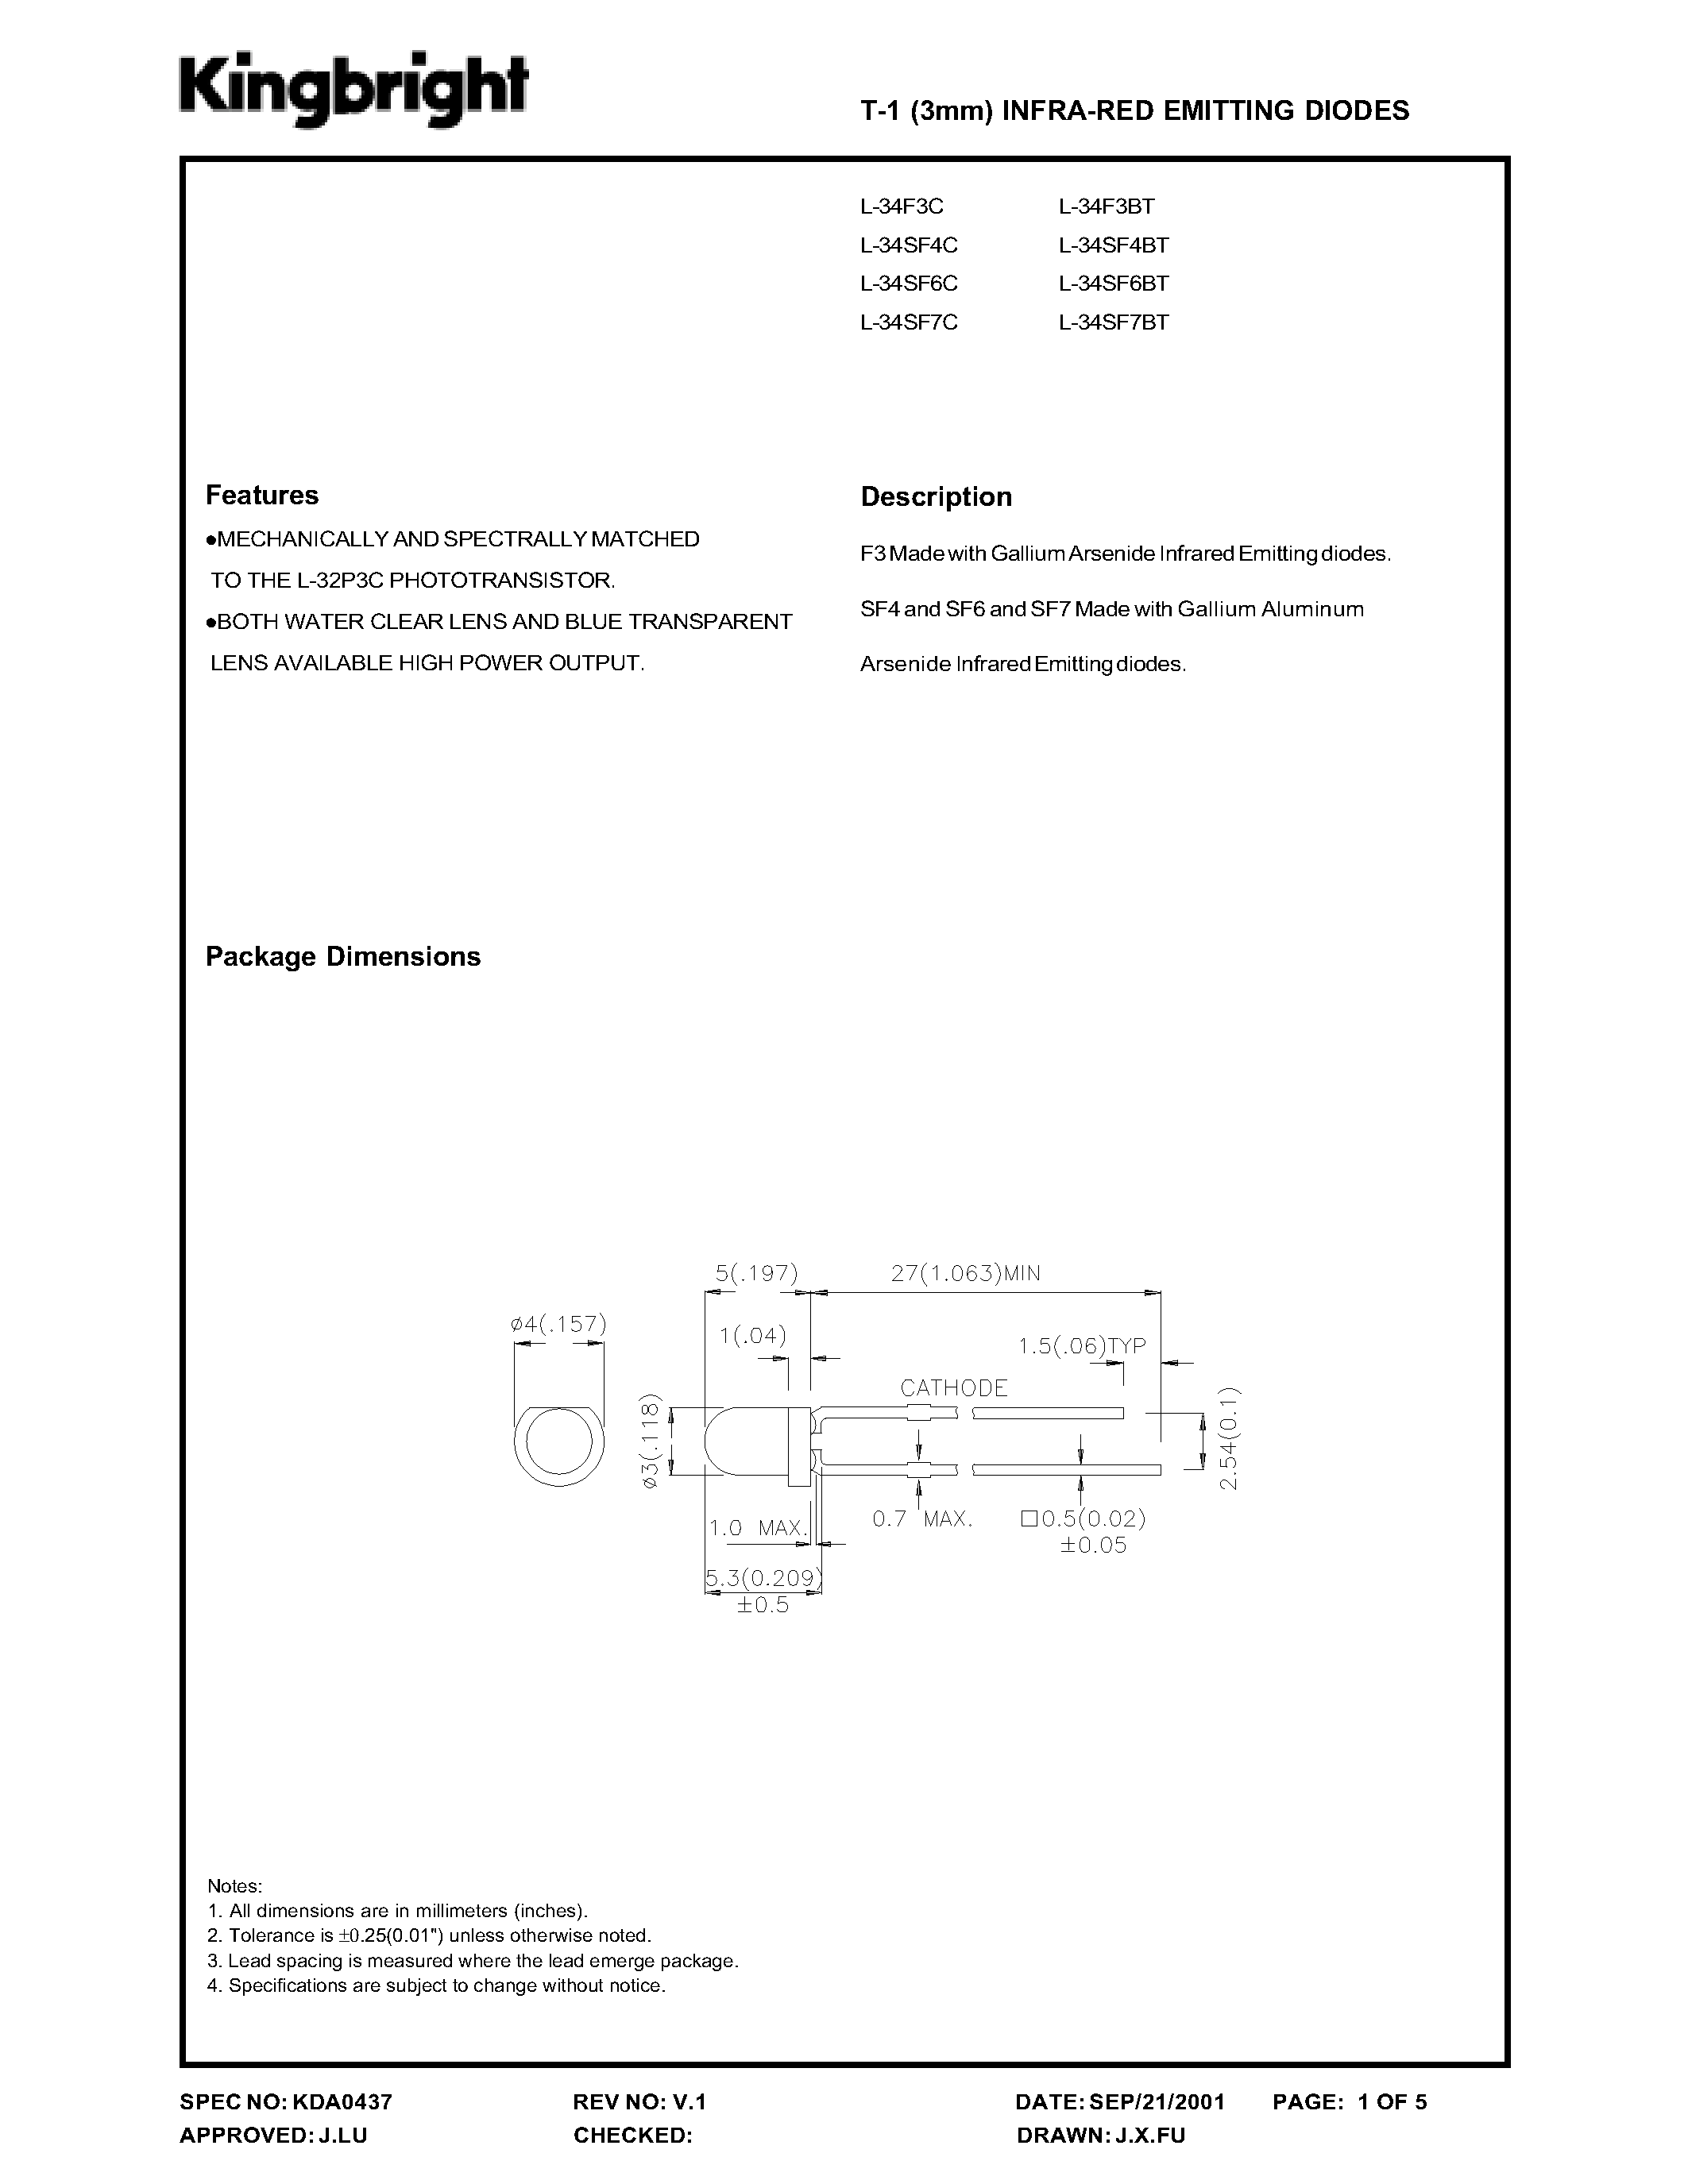 Datasheet L-34F3C - INFRA-RED EMITTIMG DIODES page 1